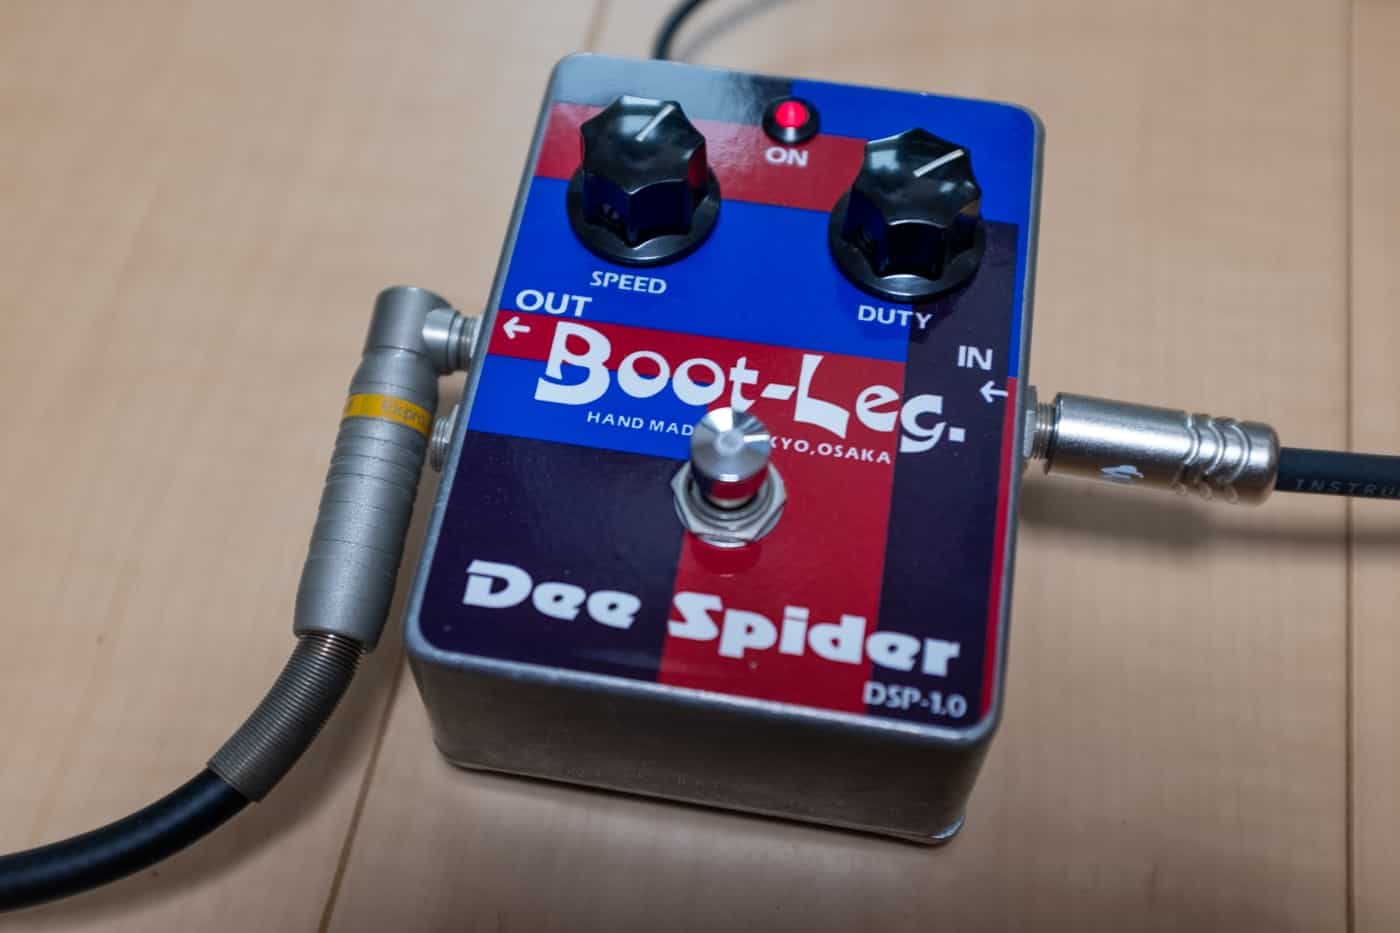 Boot-Leg. Dee Spider